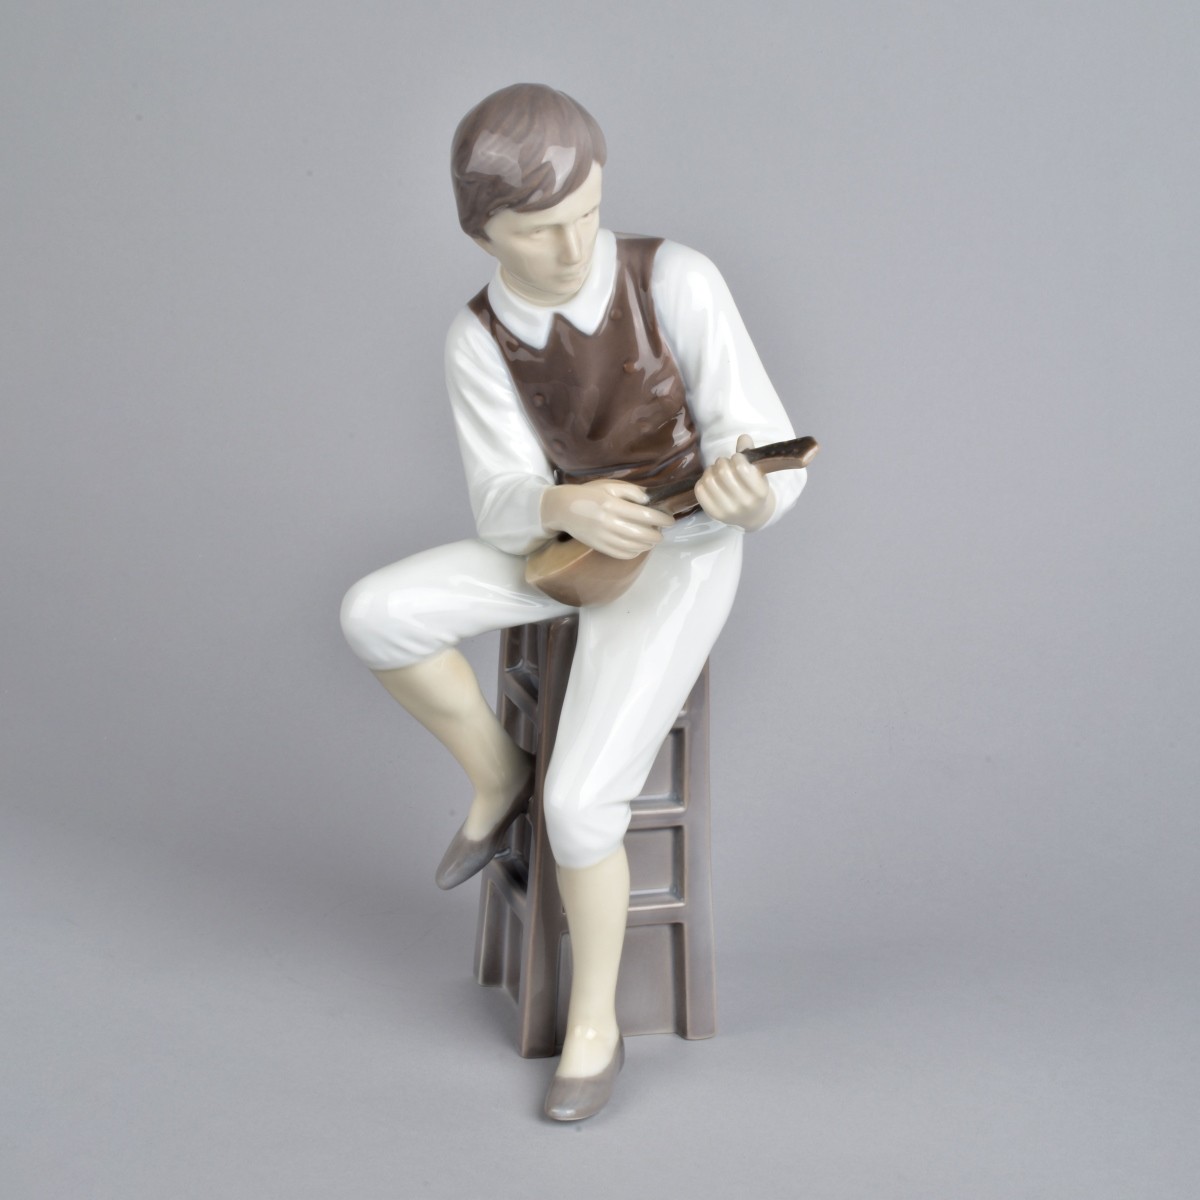 Bing & Grondahl (B&G) Porcelain Figurine